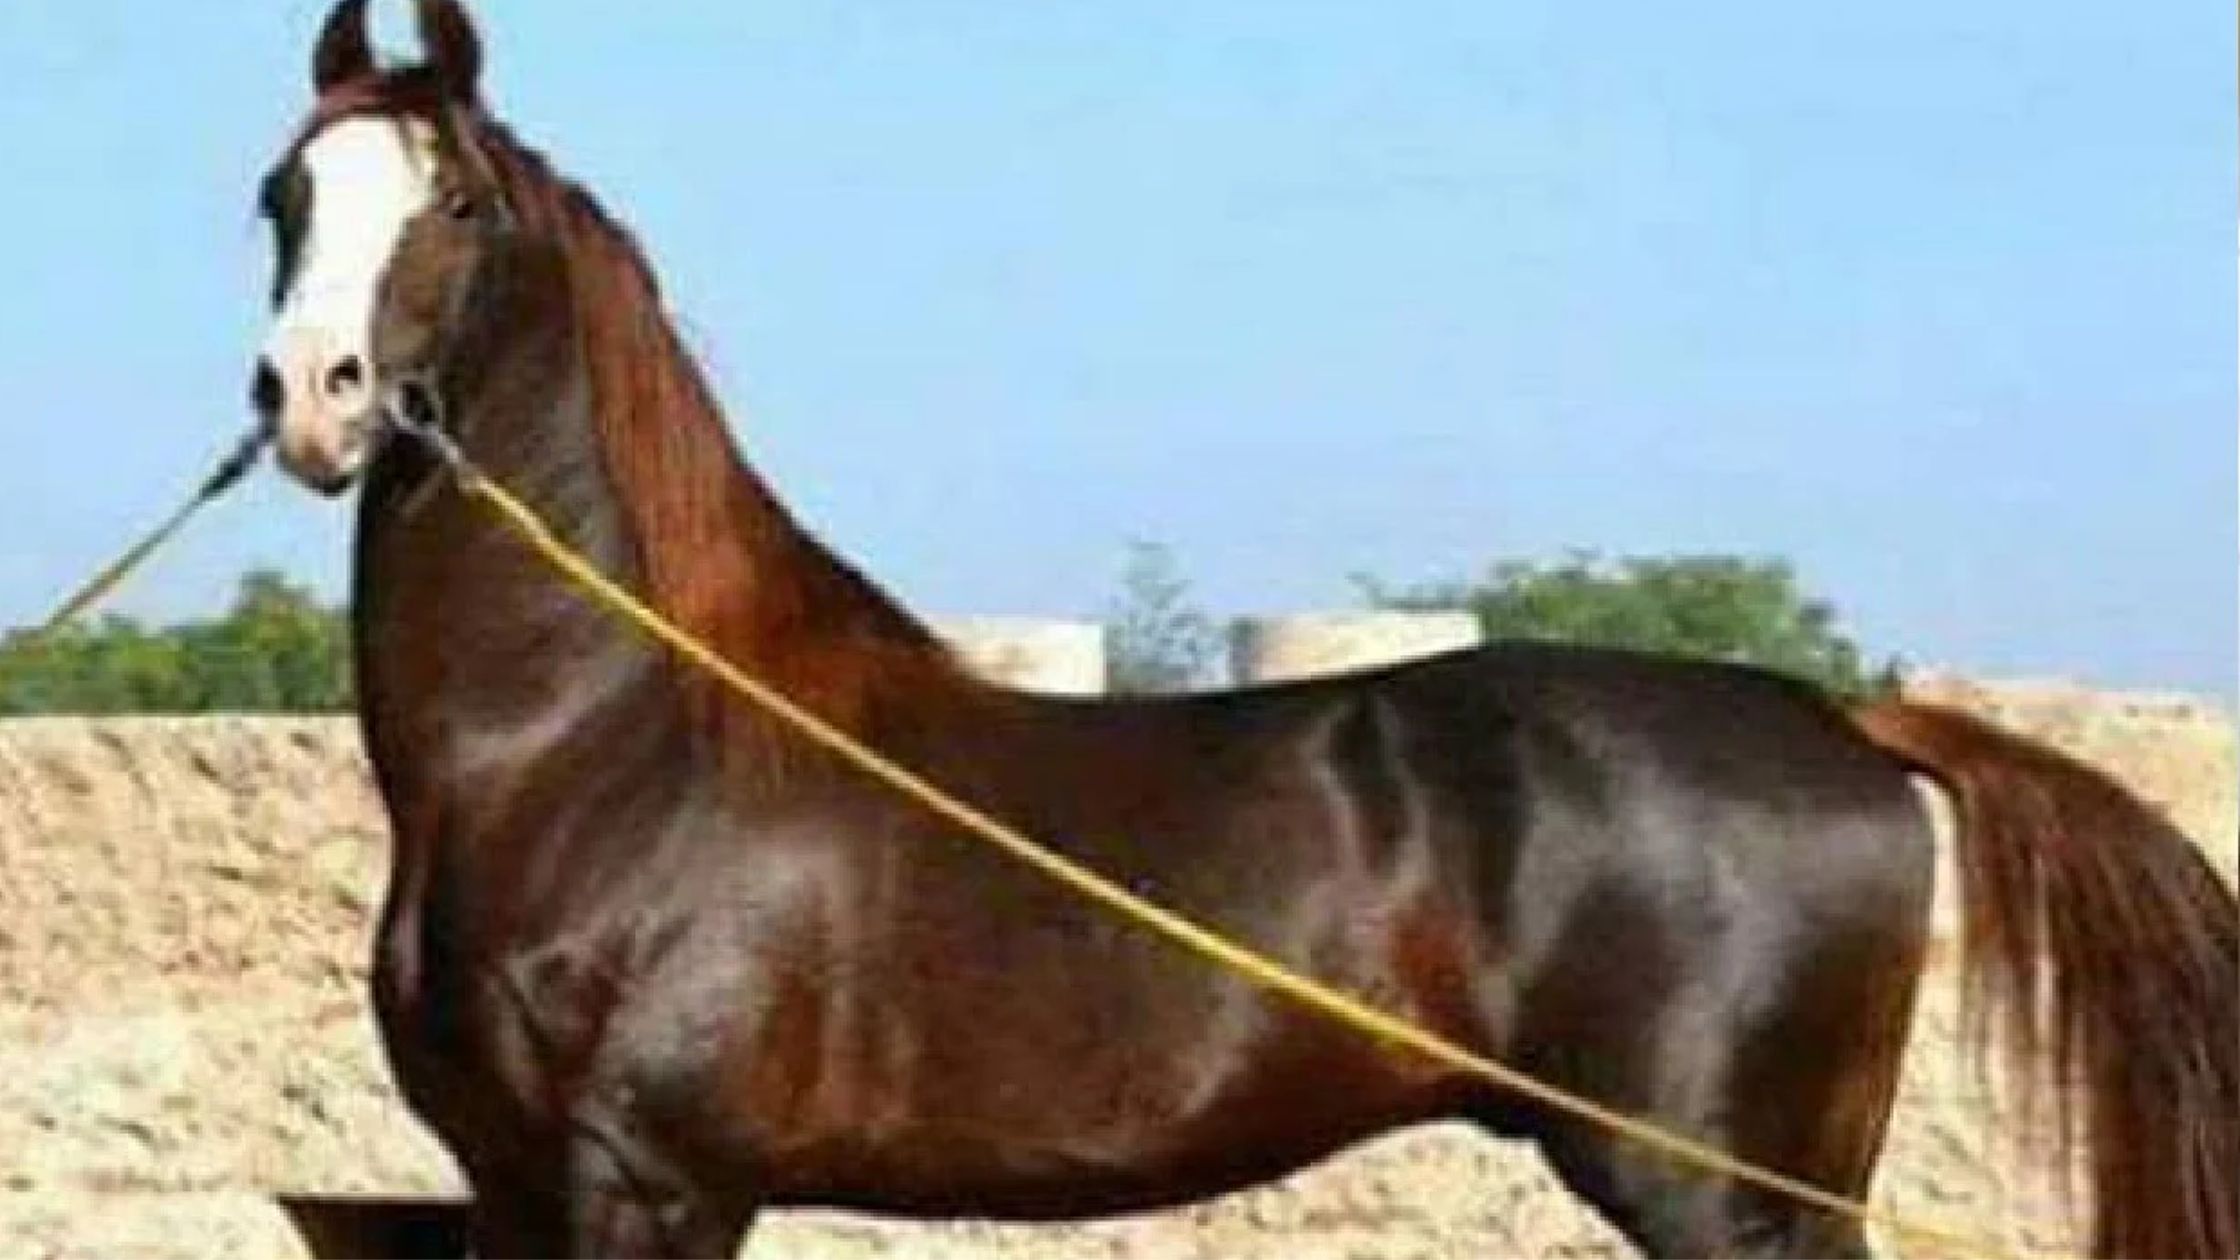 rocket horse has come in sonpur fair